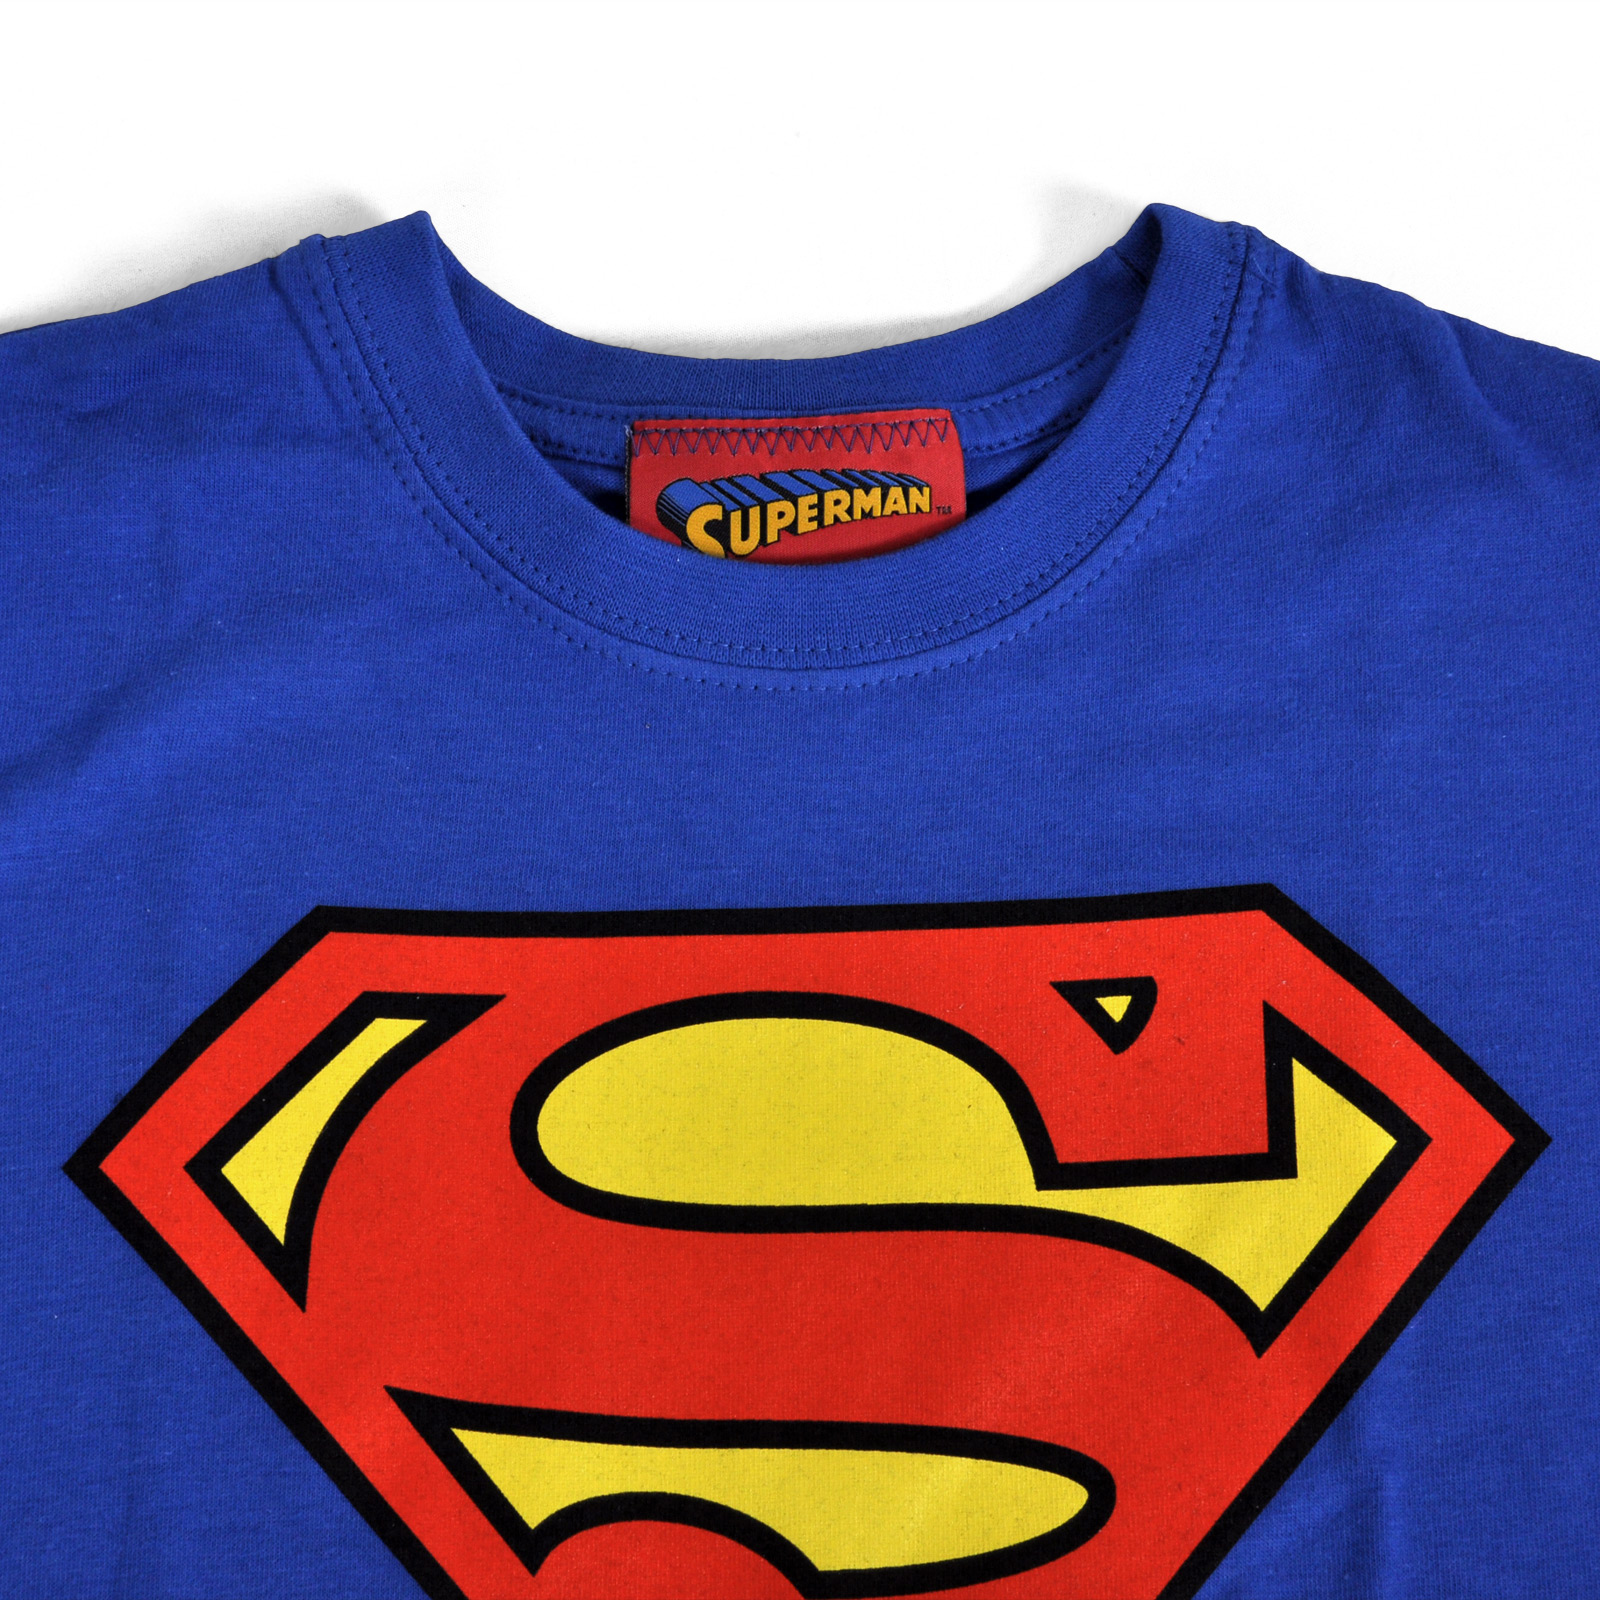 T-shirt pour enfants Superman Logo bleu